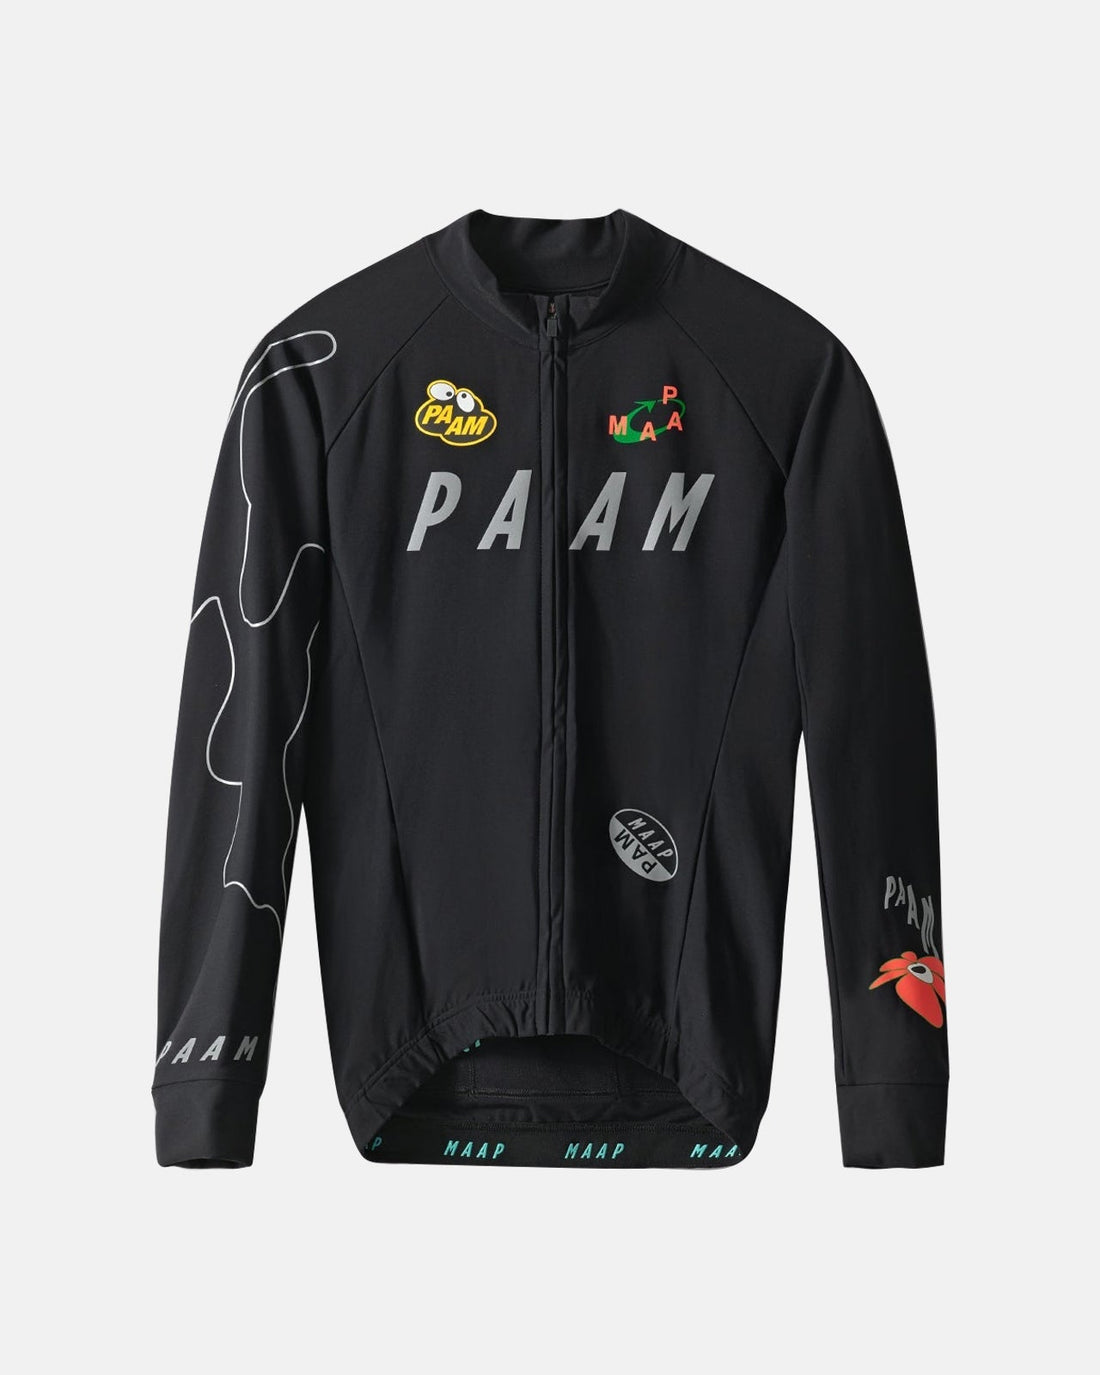 x PAM Thermal LS Jersey - Black